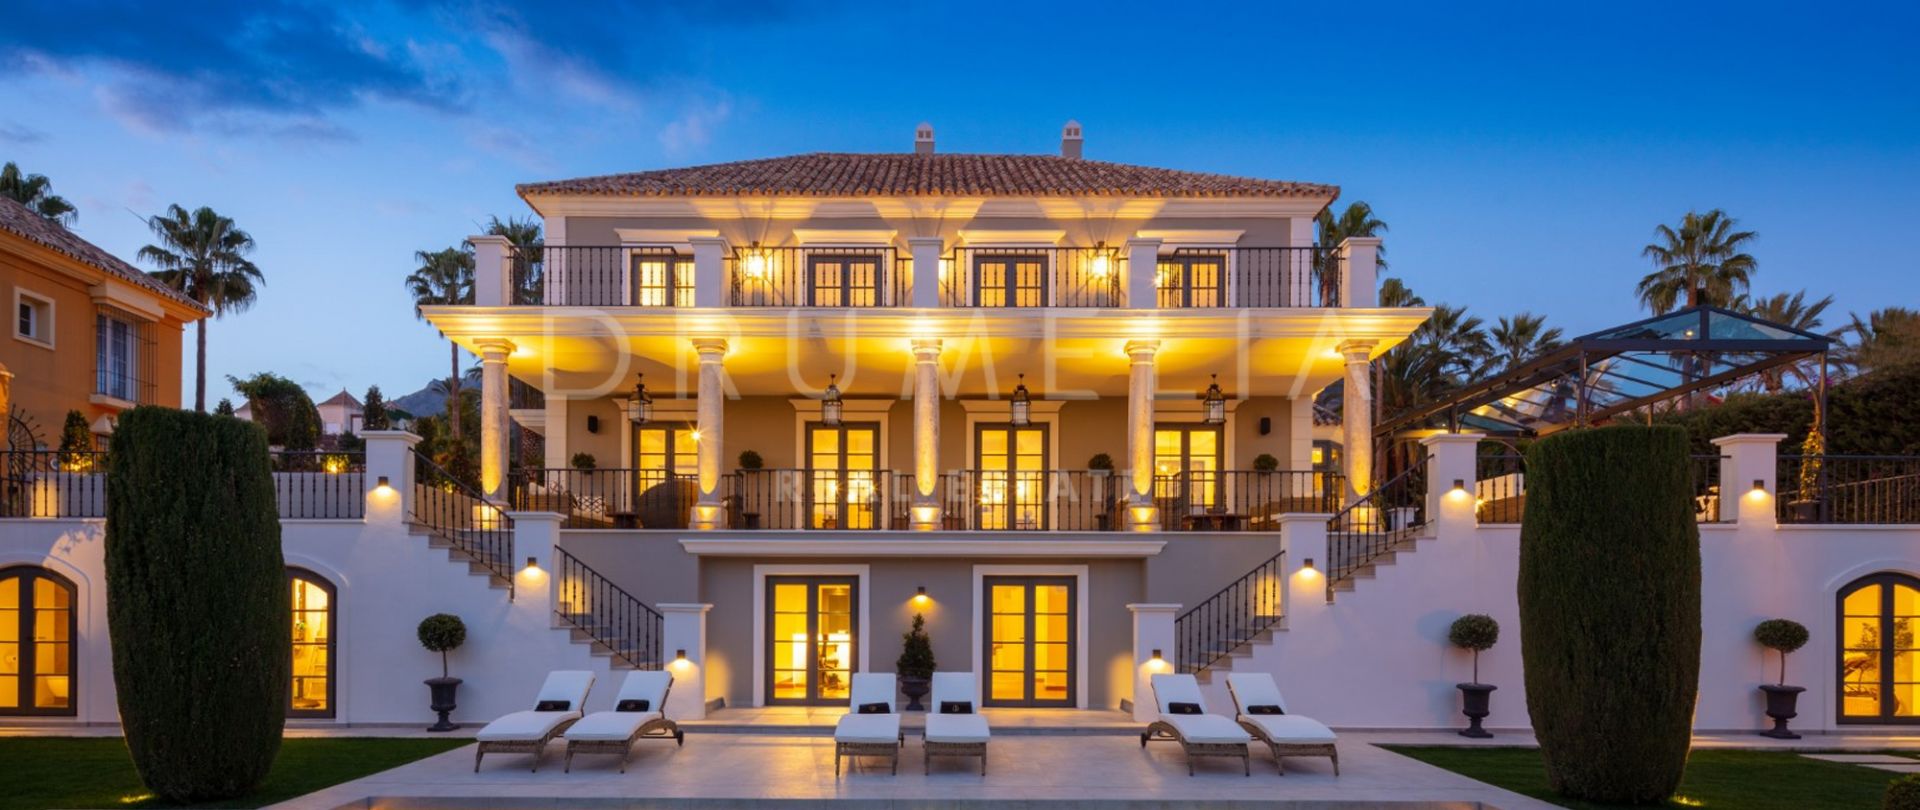 Atemberaubende moderne mediterrane Luxusvilla, Sierra Blanca, Marbella Goldene Meile